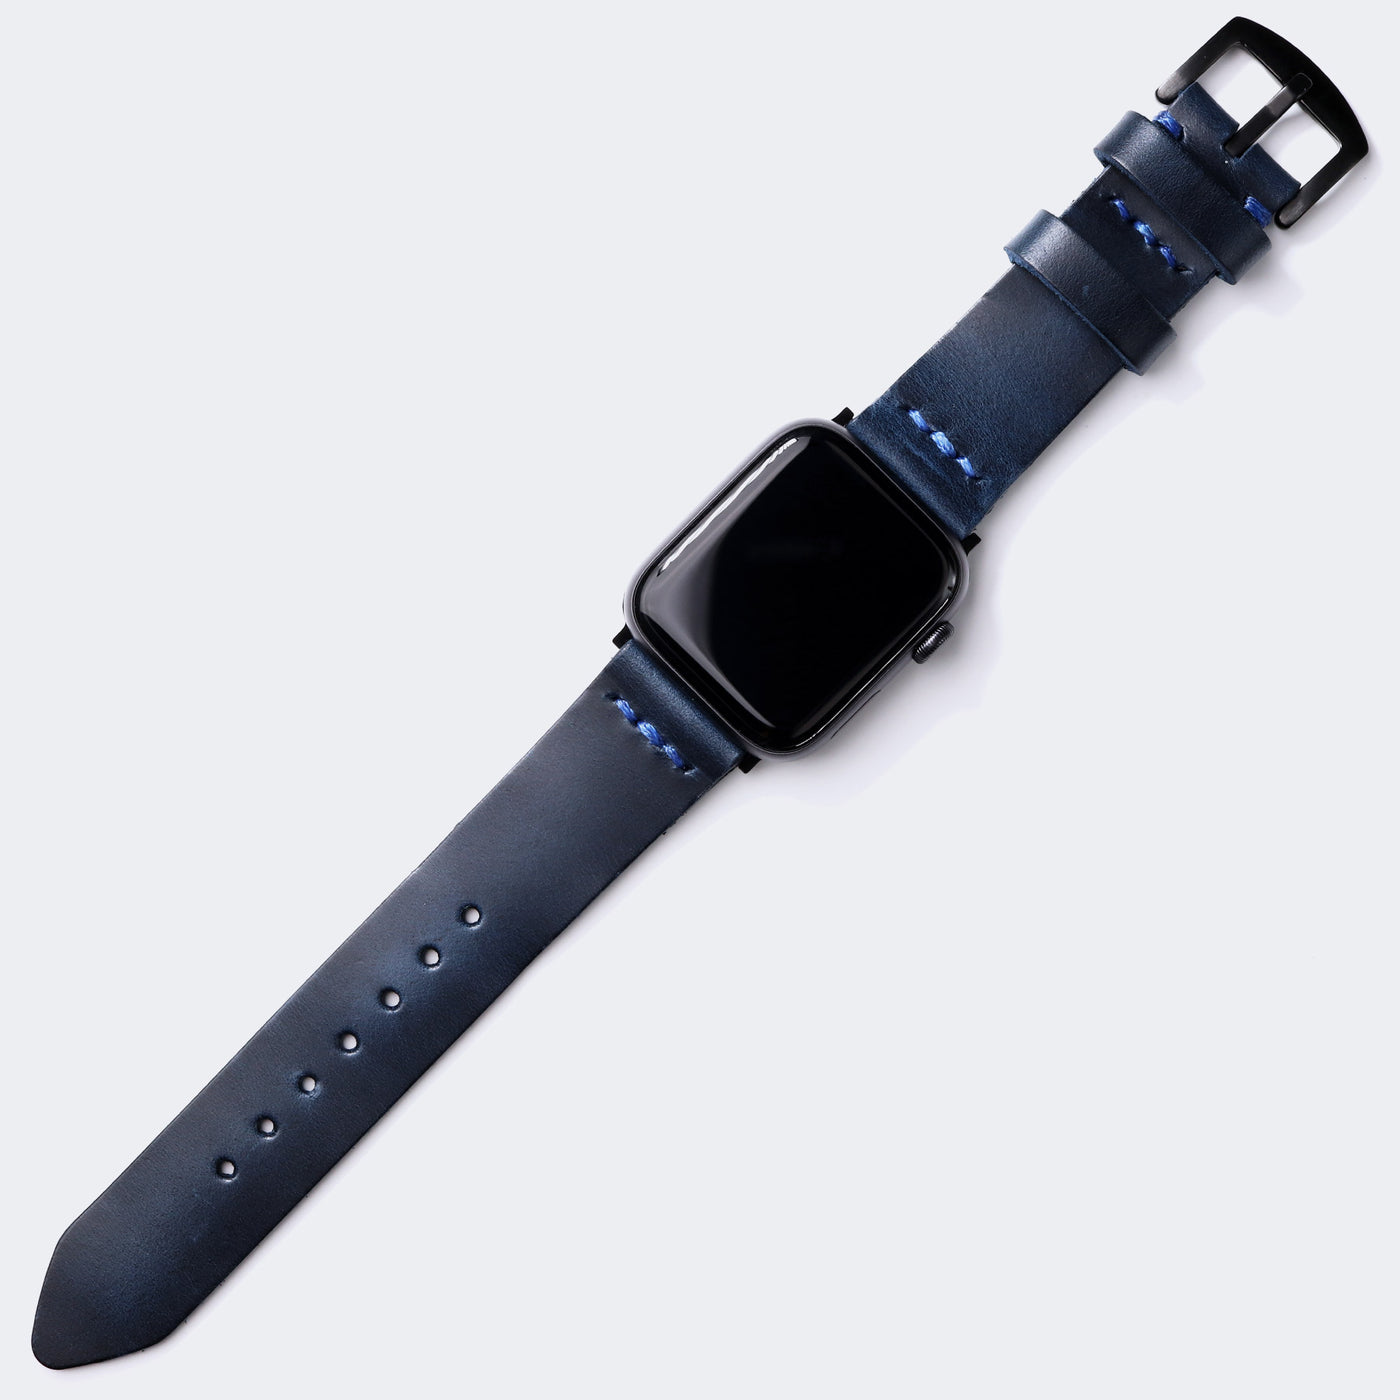 Apple Watch Leather Band - Indigo Blue